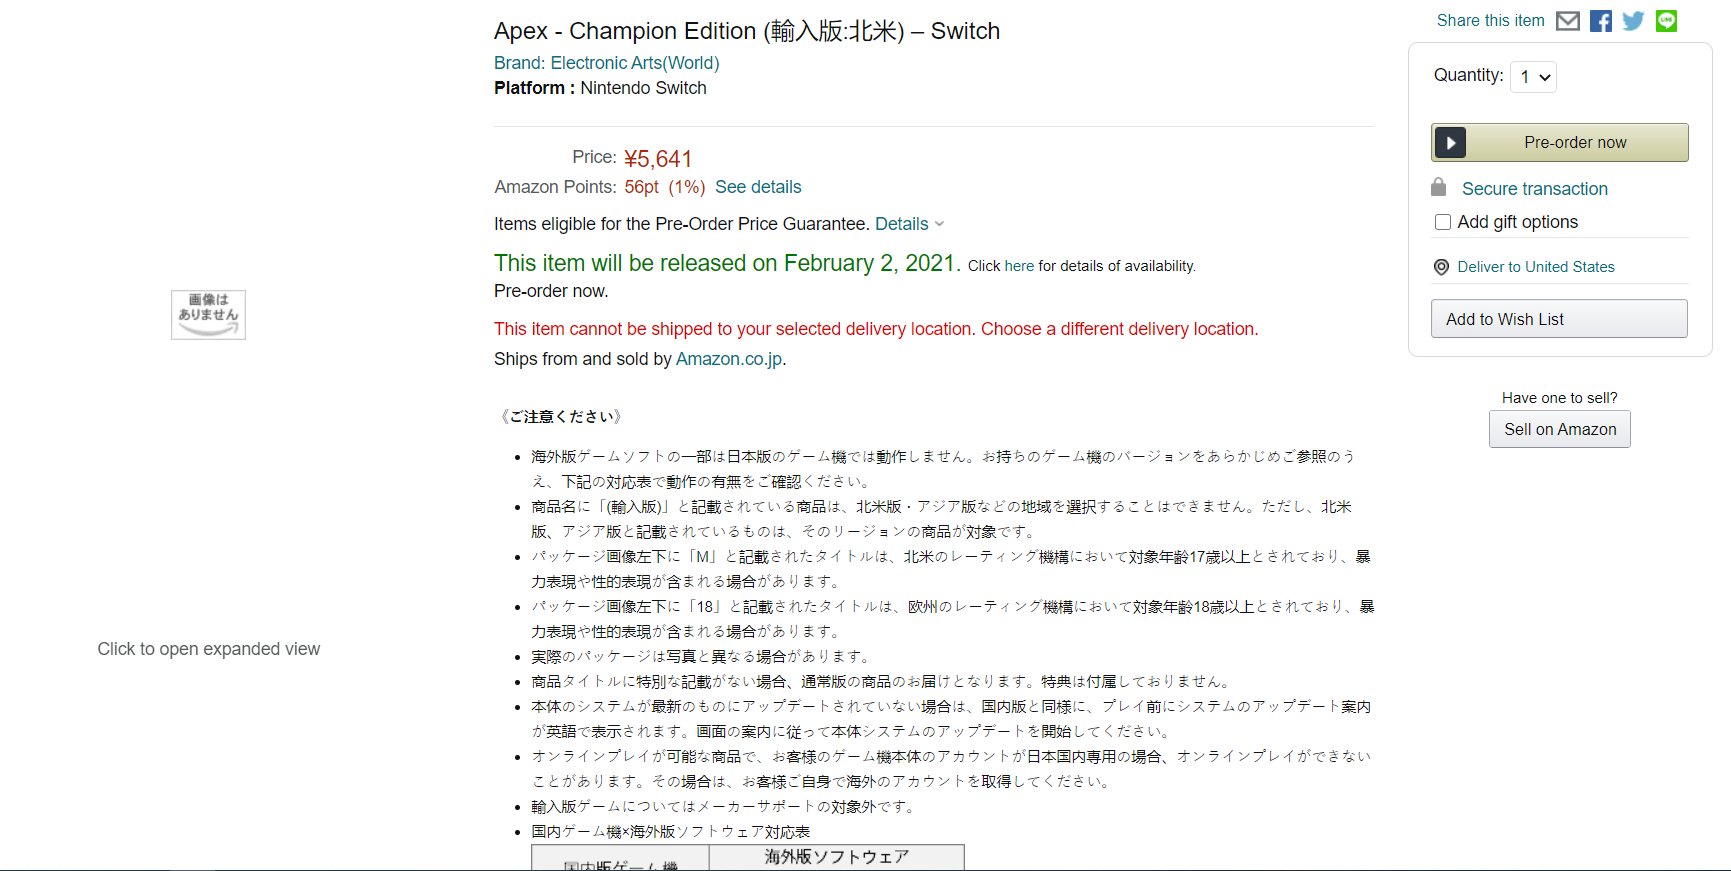 Apex Legends on Nintendo Switch release date